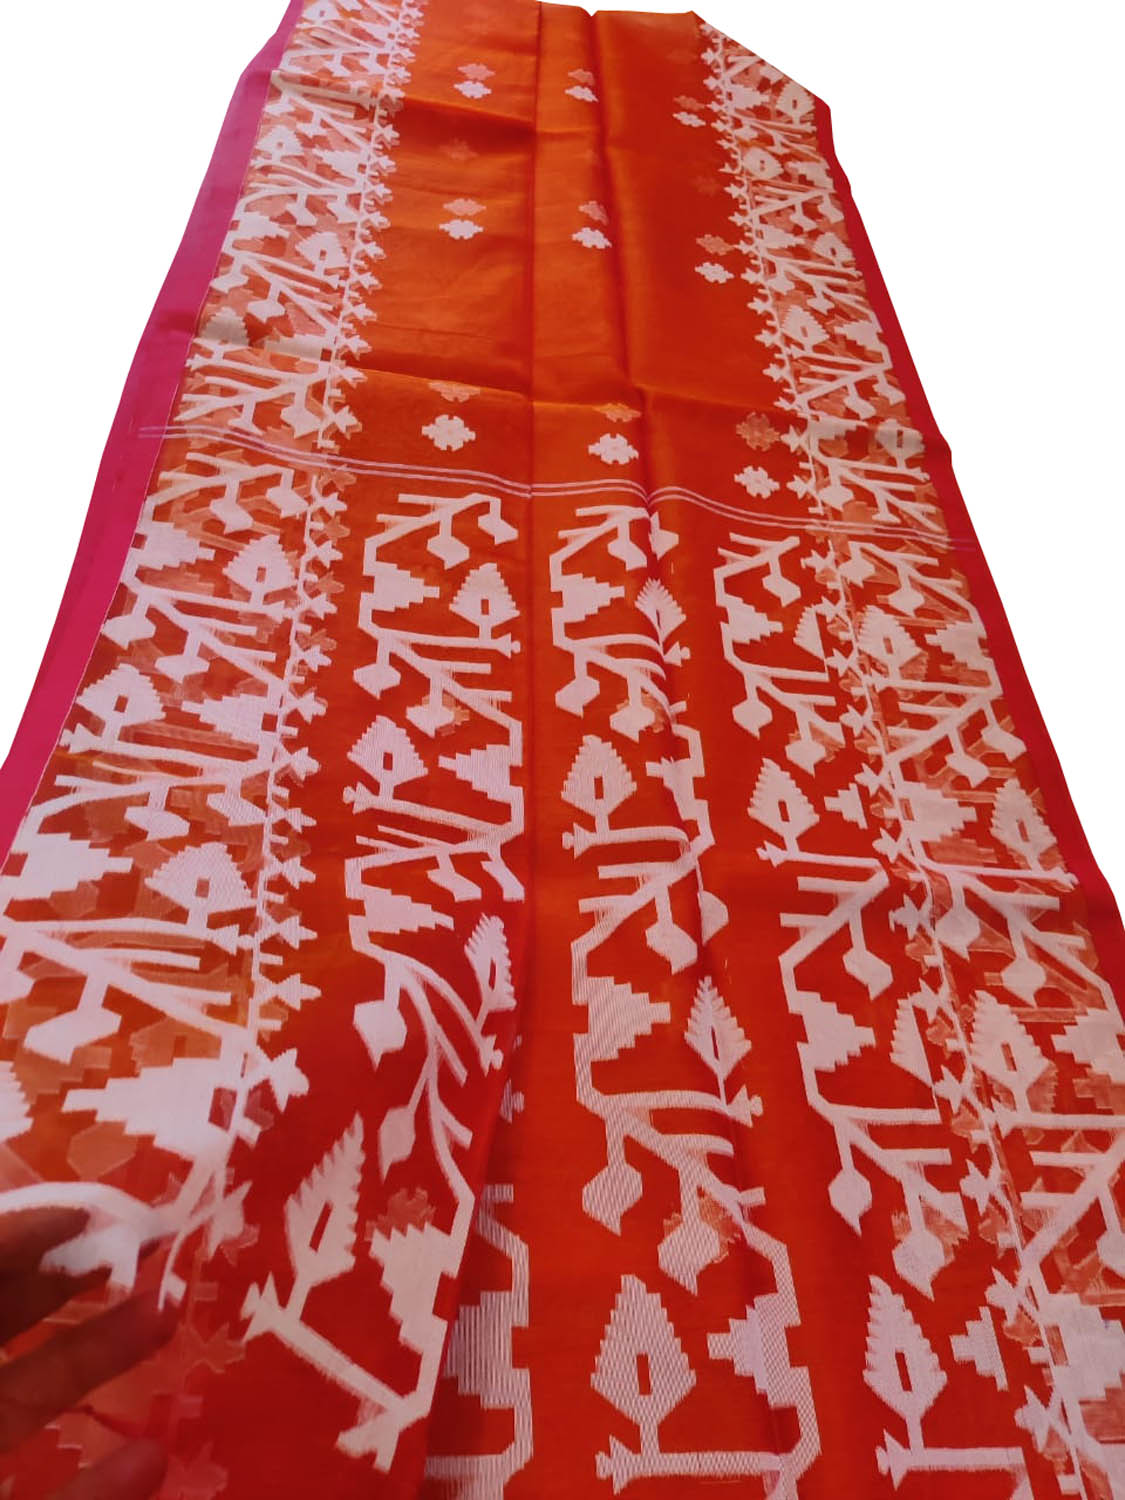 Exquisite Orange Handloom Jamdani Muslin Saree - Perfect for Any Occasion! - Luxurion World